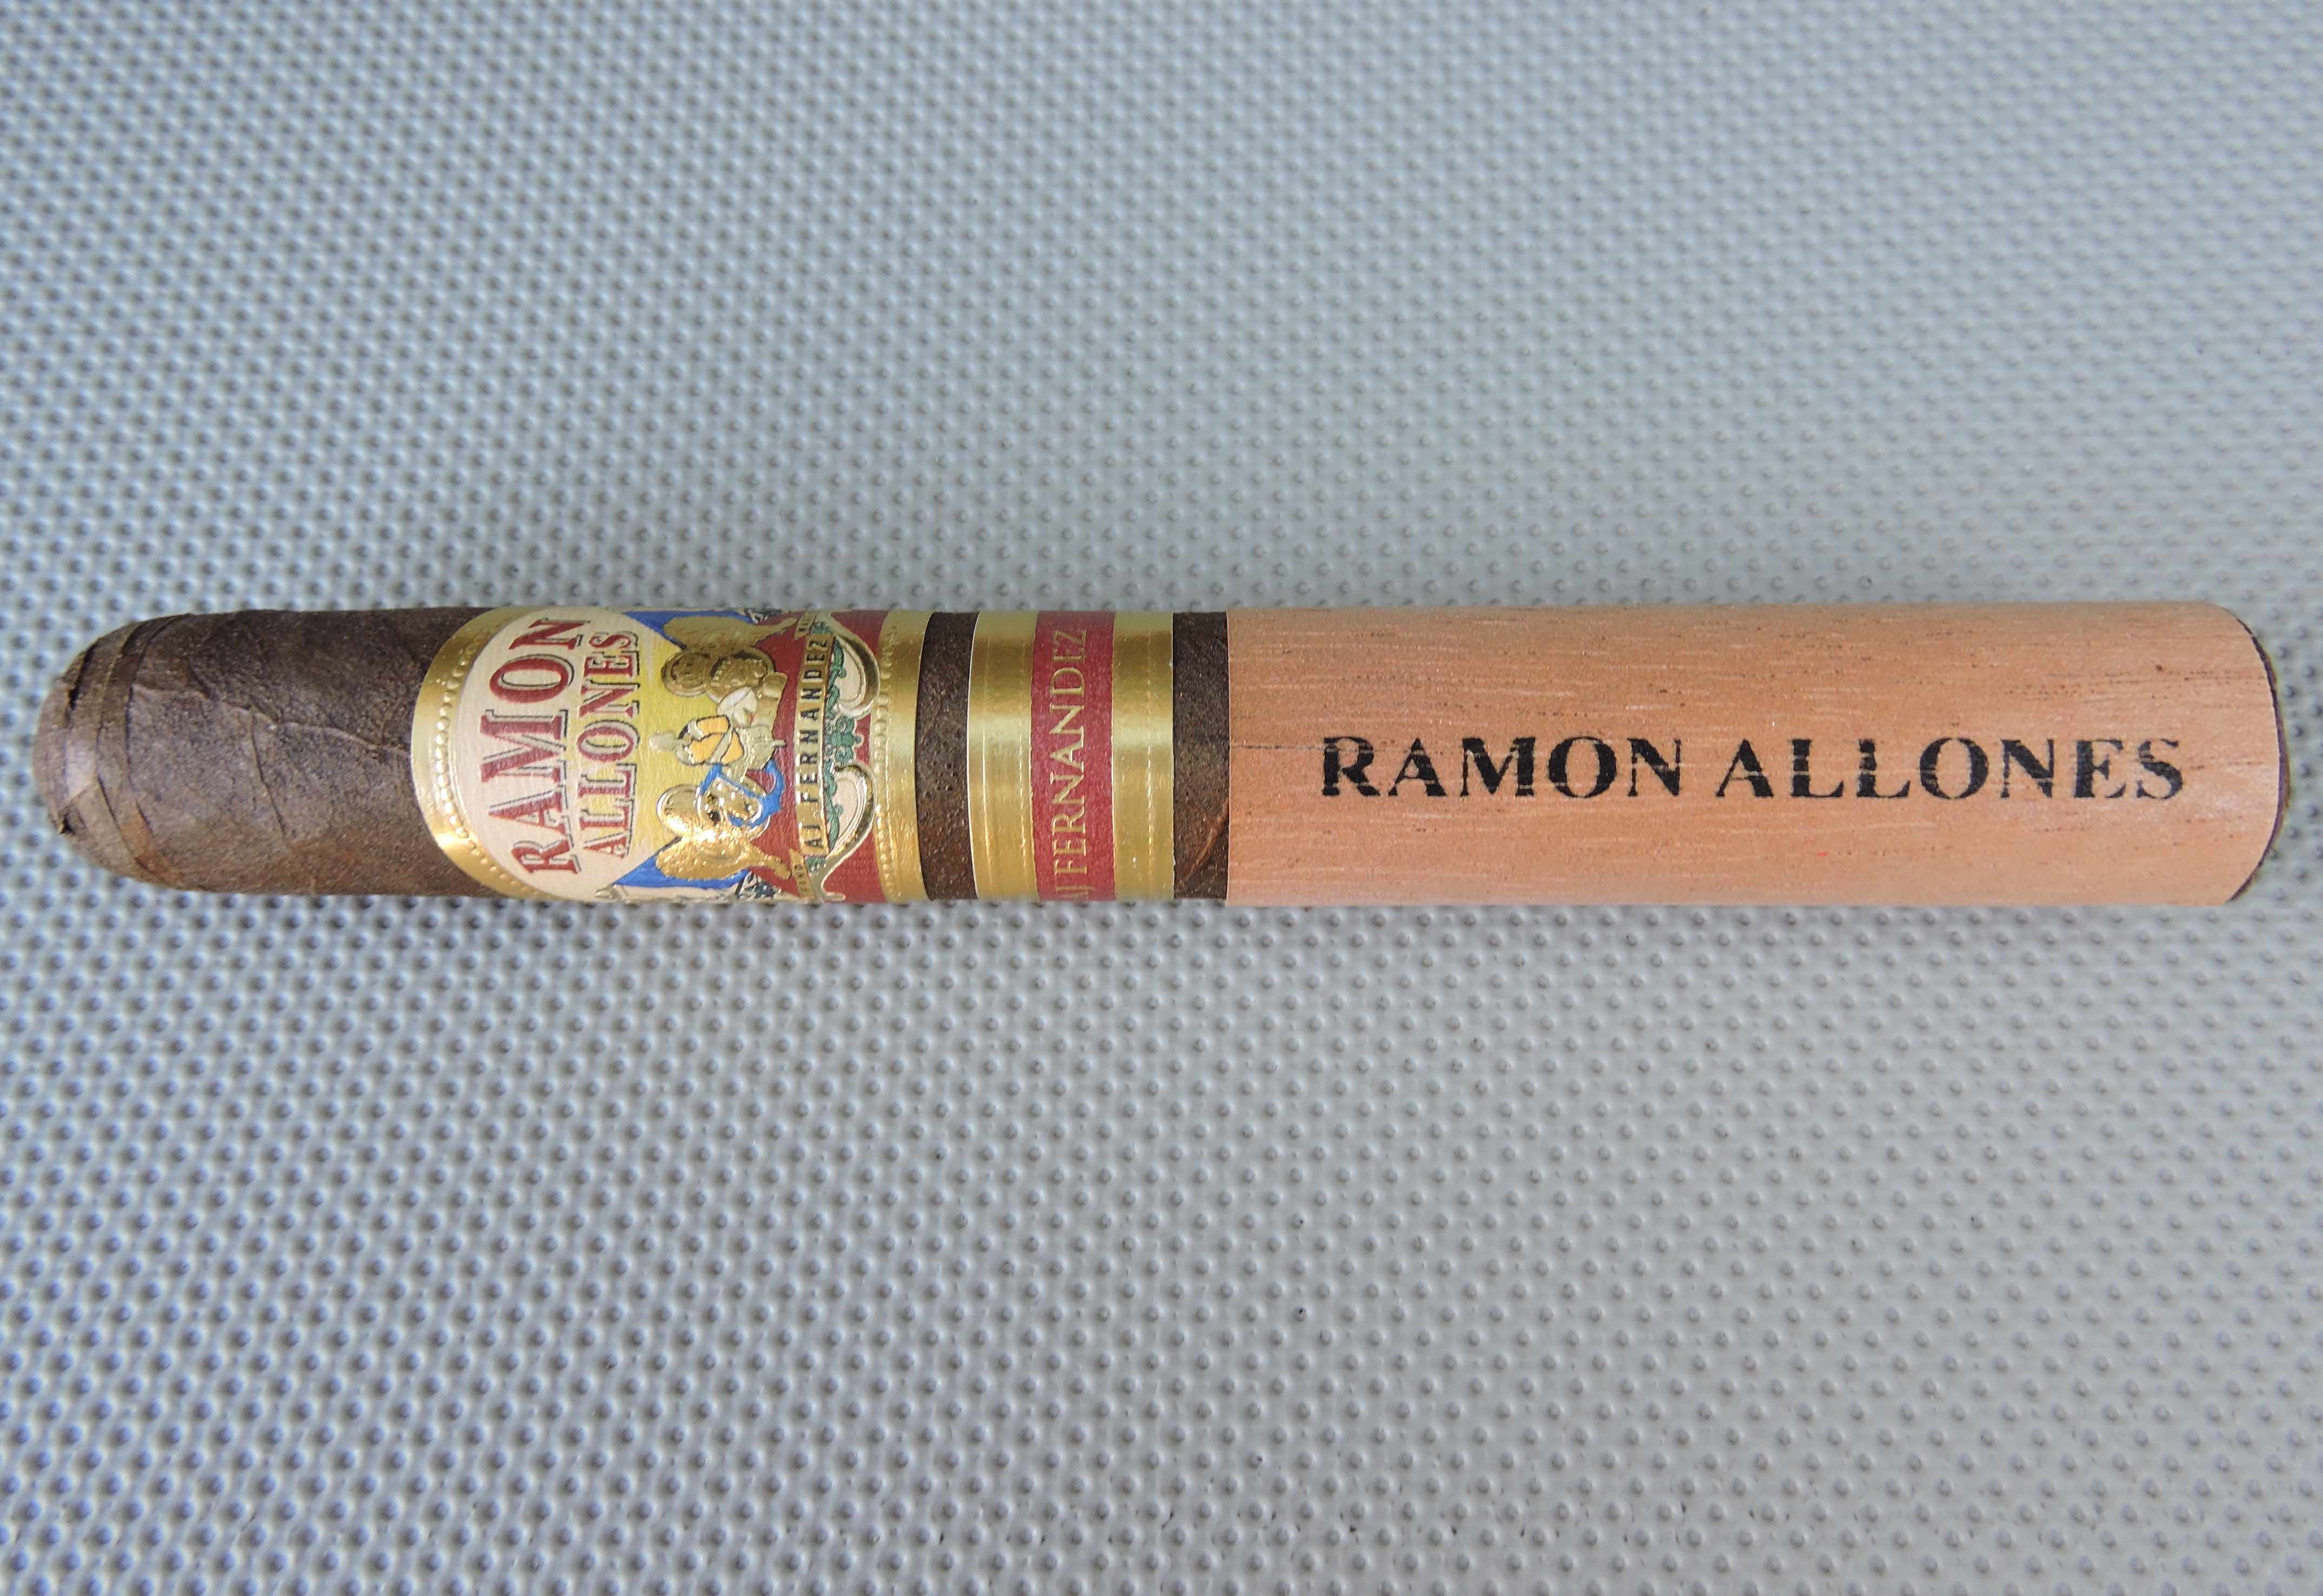 Ramon Allones by AJ Fernandez Toro